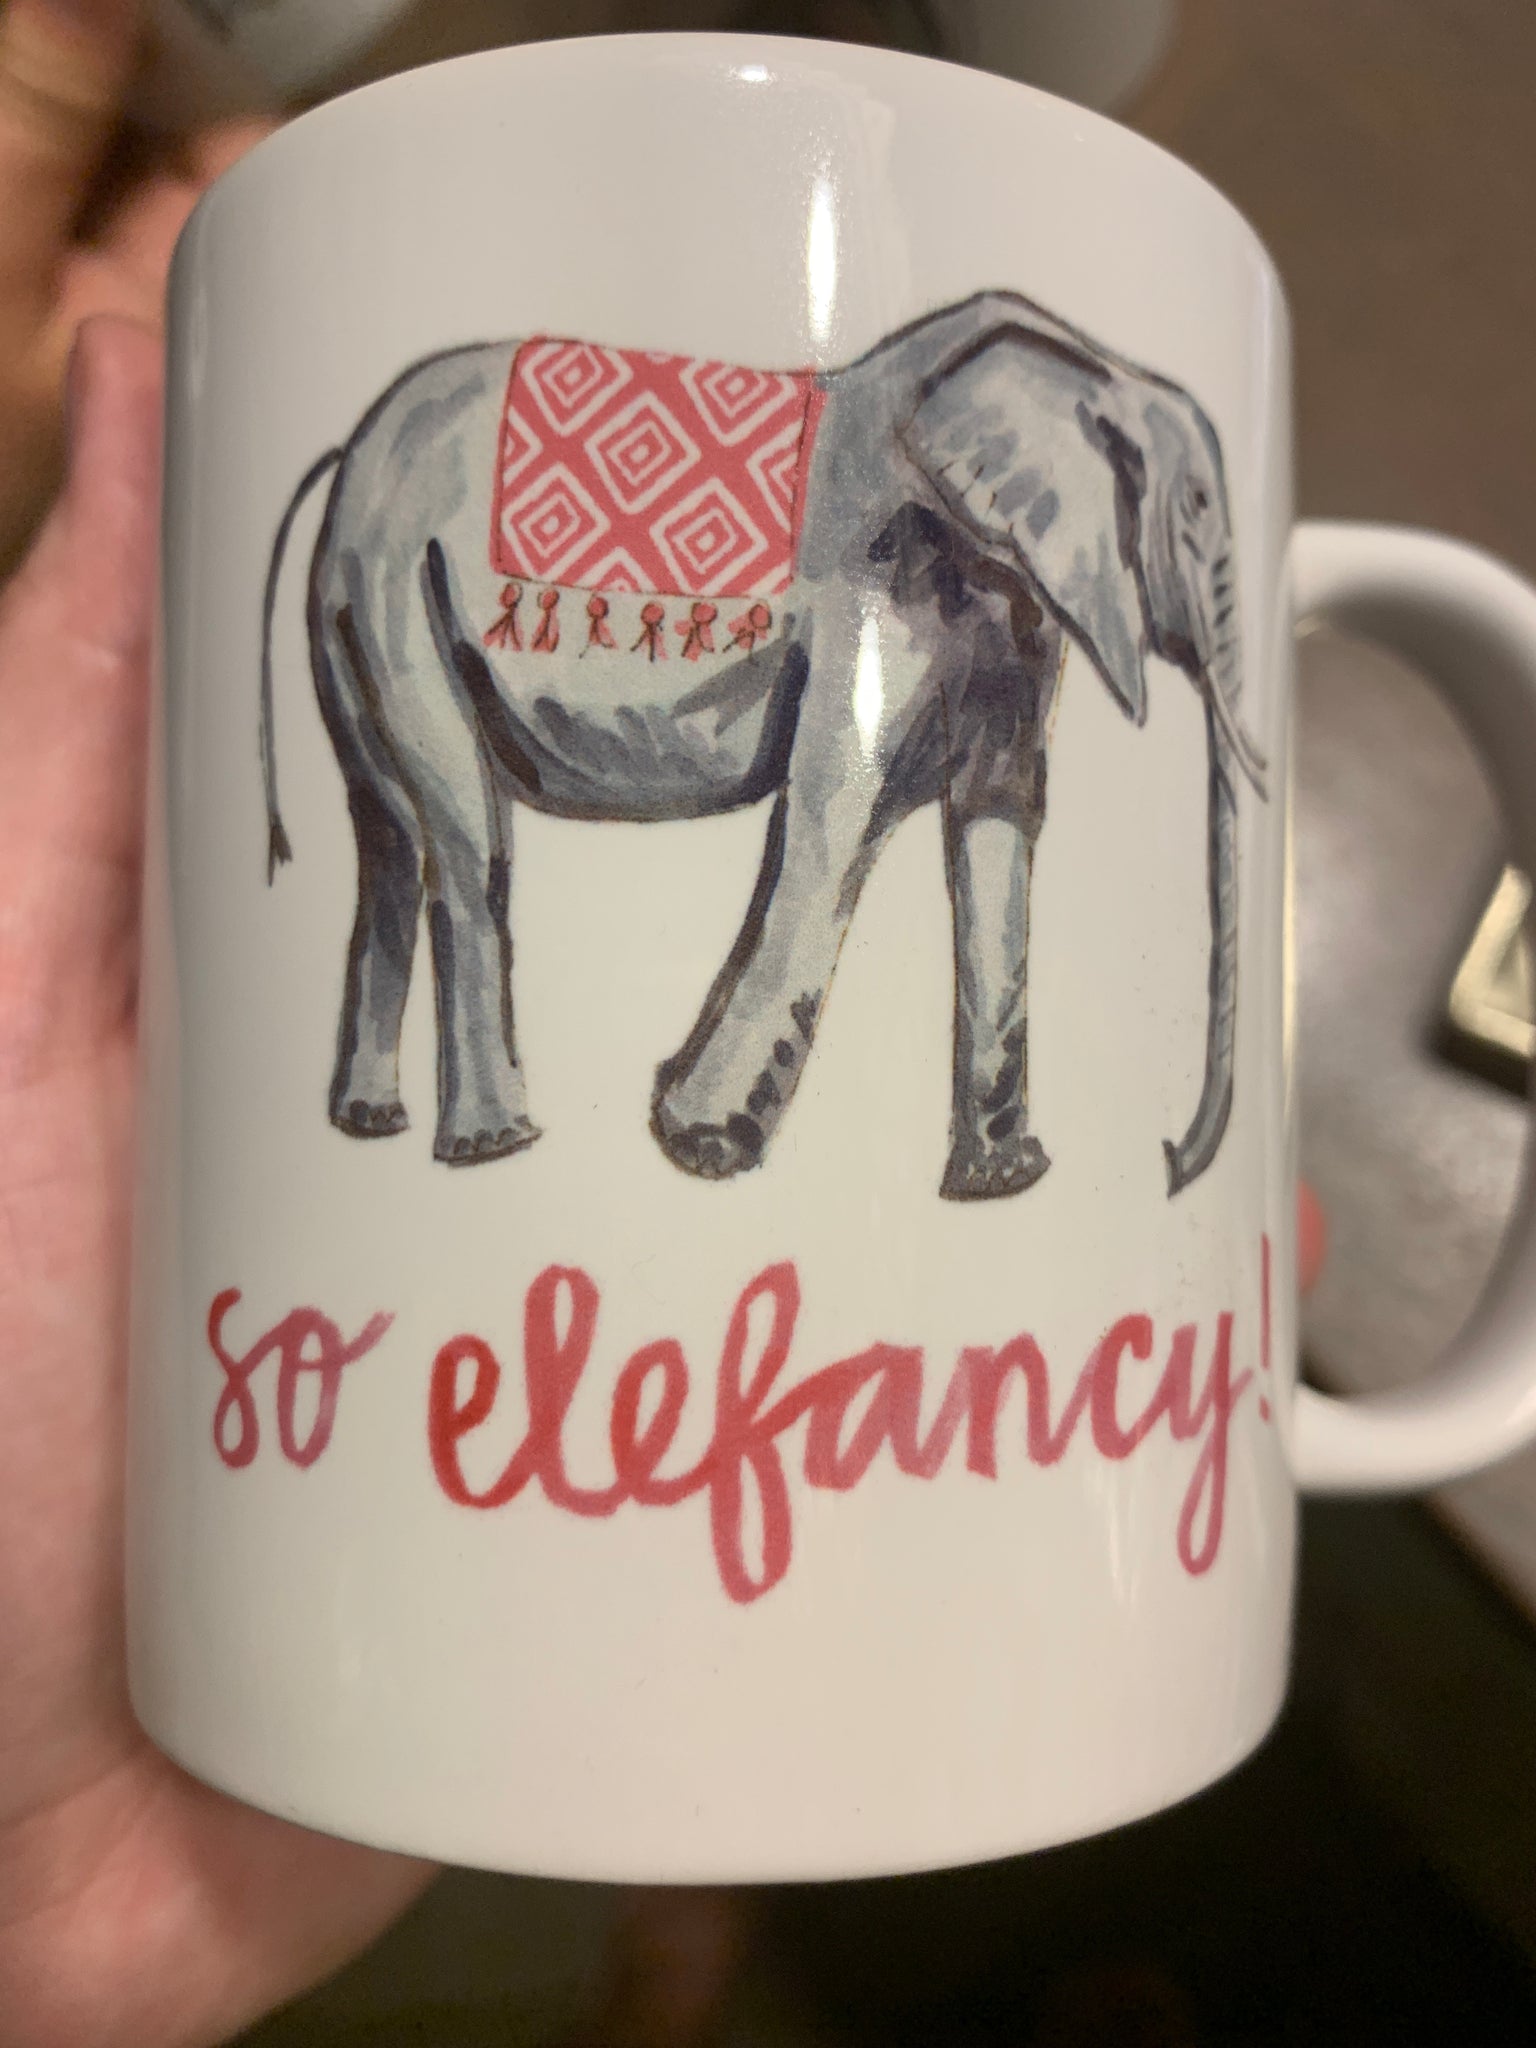 So elephancy mug